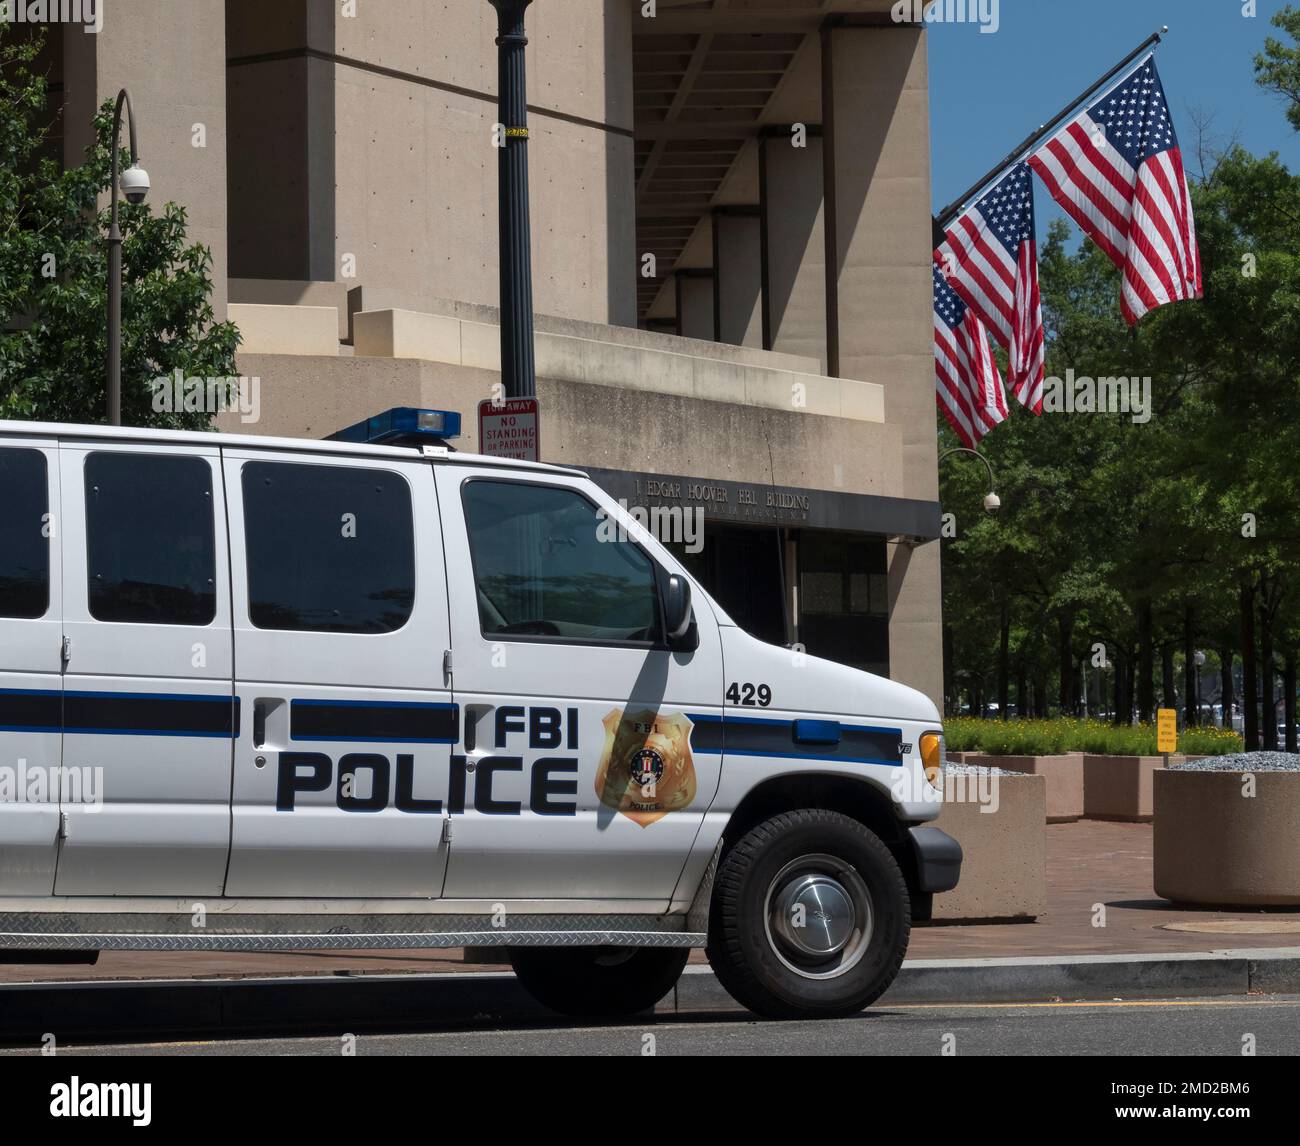 FBI Police Vehicle outside the J Edgar Hoover FBI Building, Pennsylvania Avenue, Washington DC, USA Stock Photo